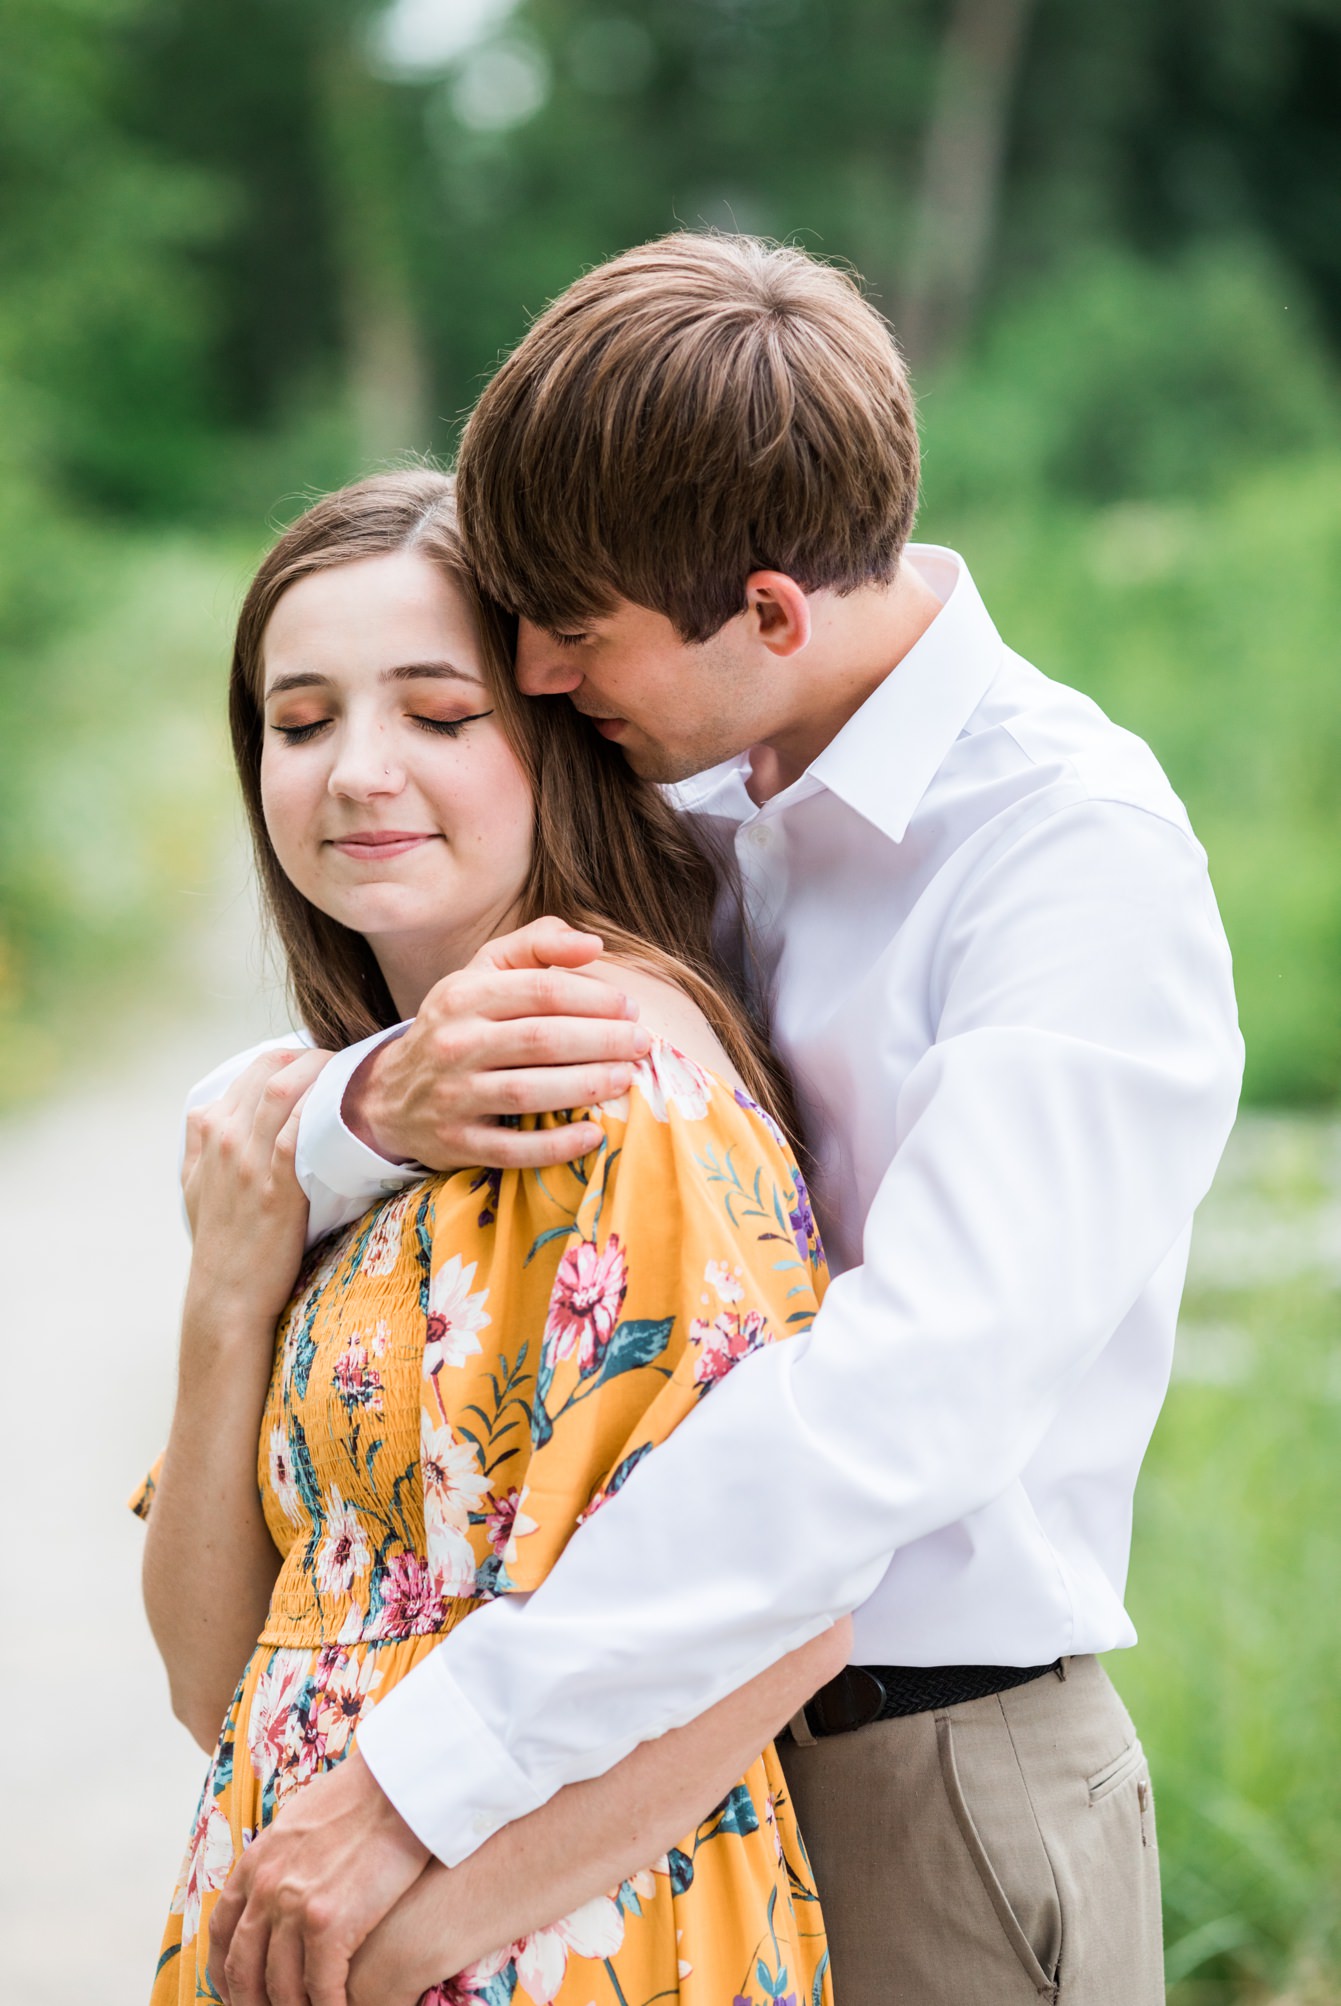 Guy holding his girl at the Matthaei Botanical Gardens in Ann Arbor, Michigan